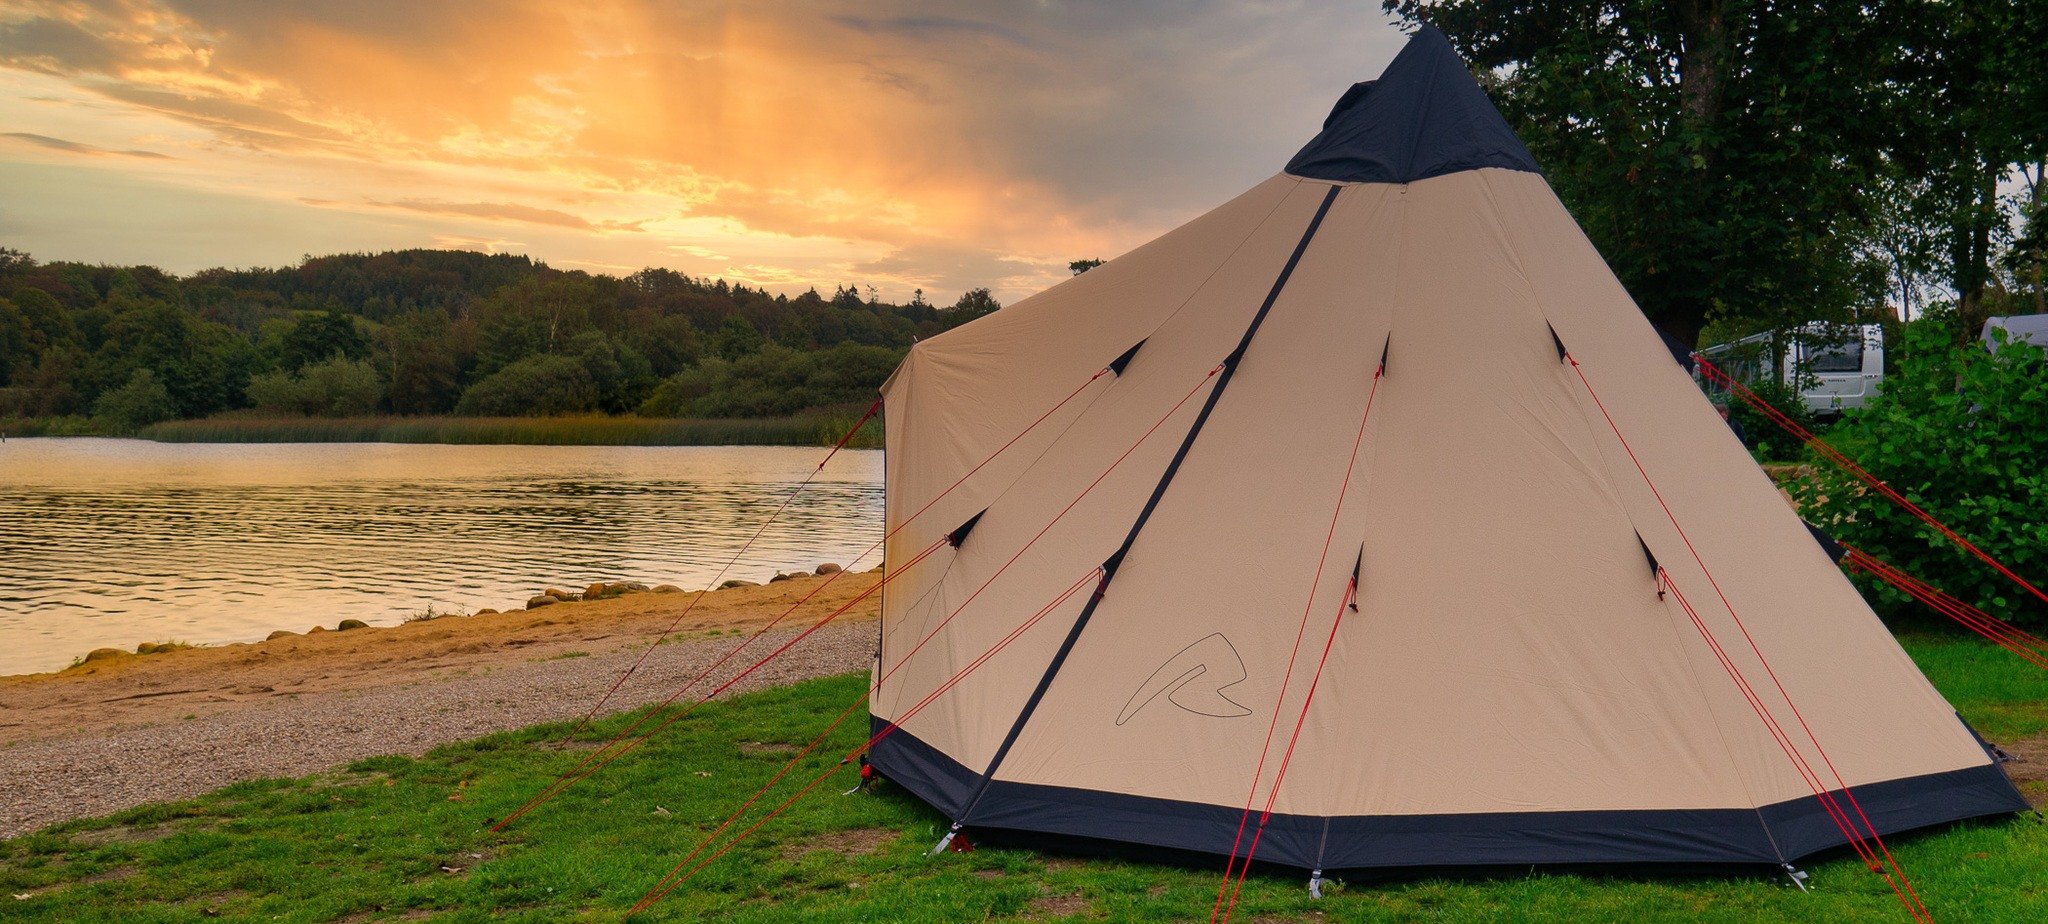 The Chinook Ursa tent overlooking the lake